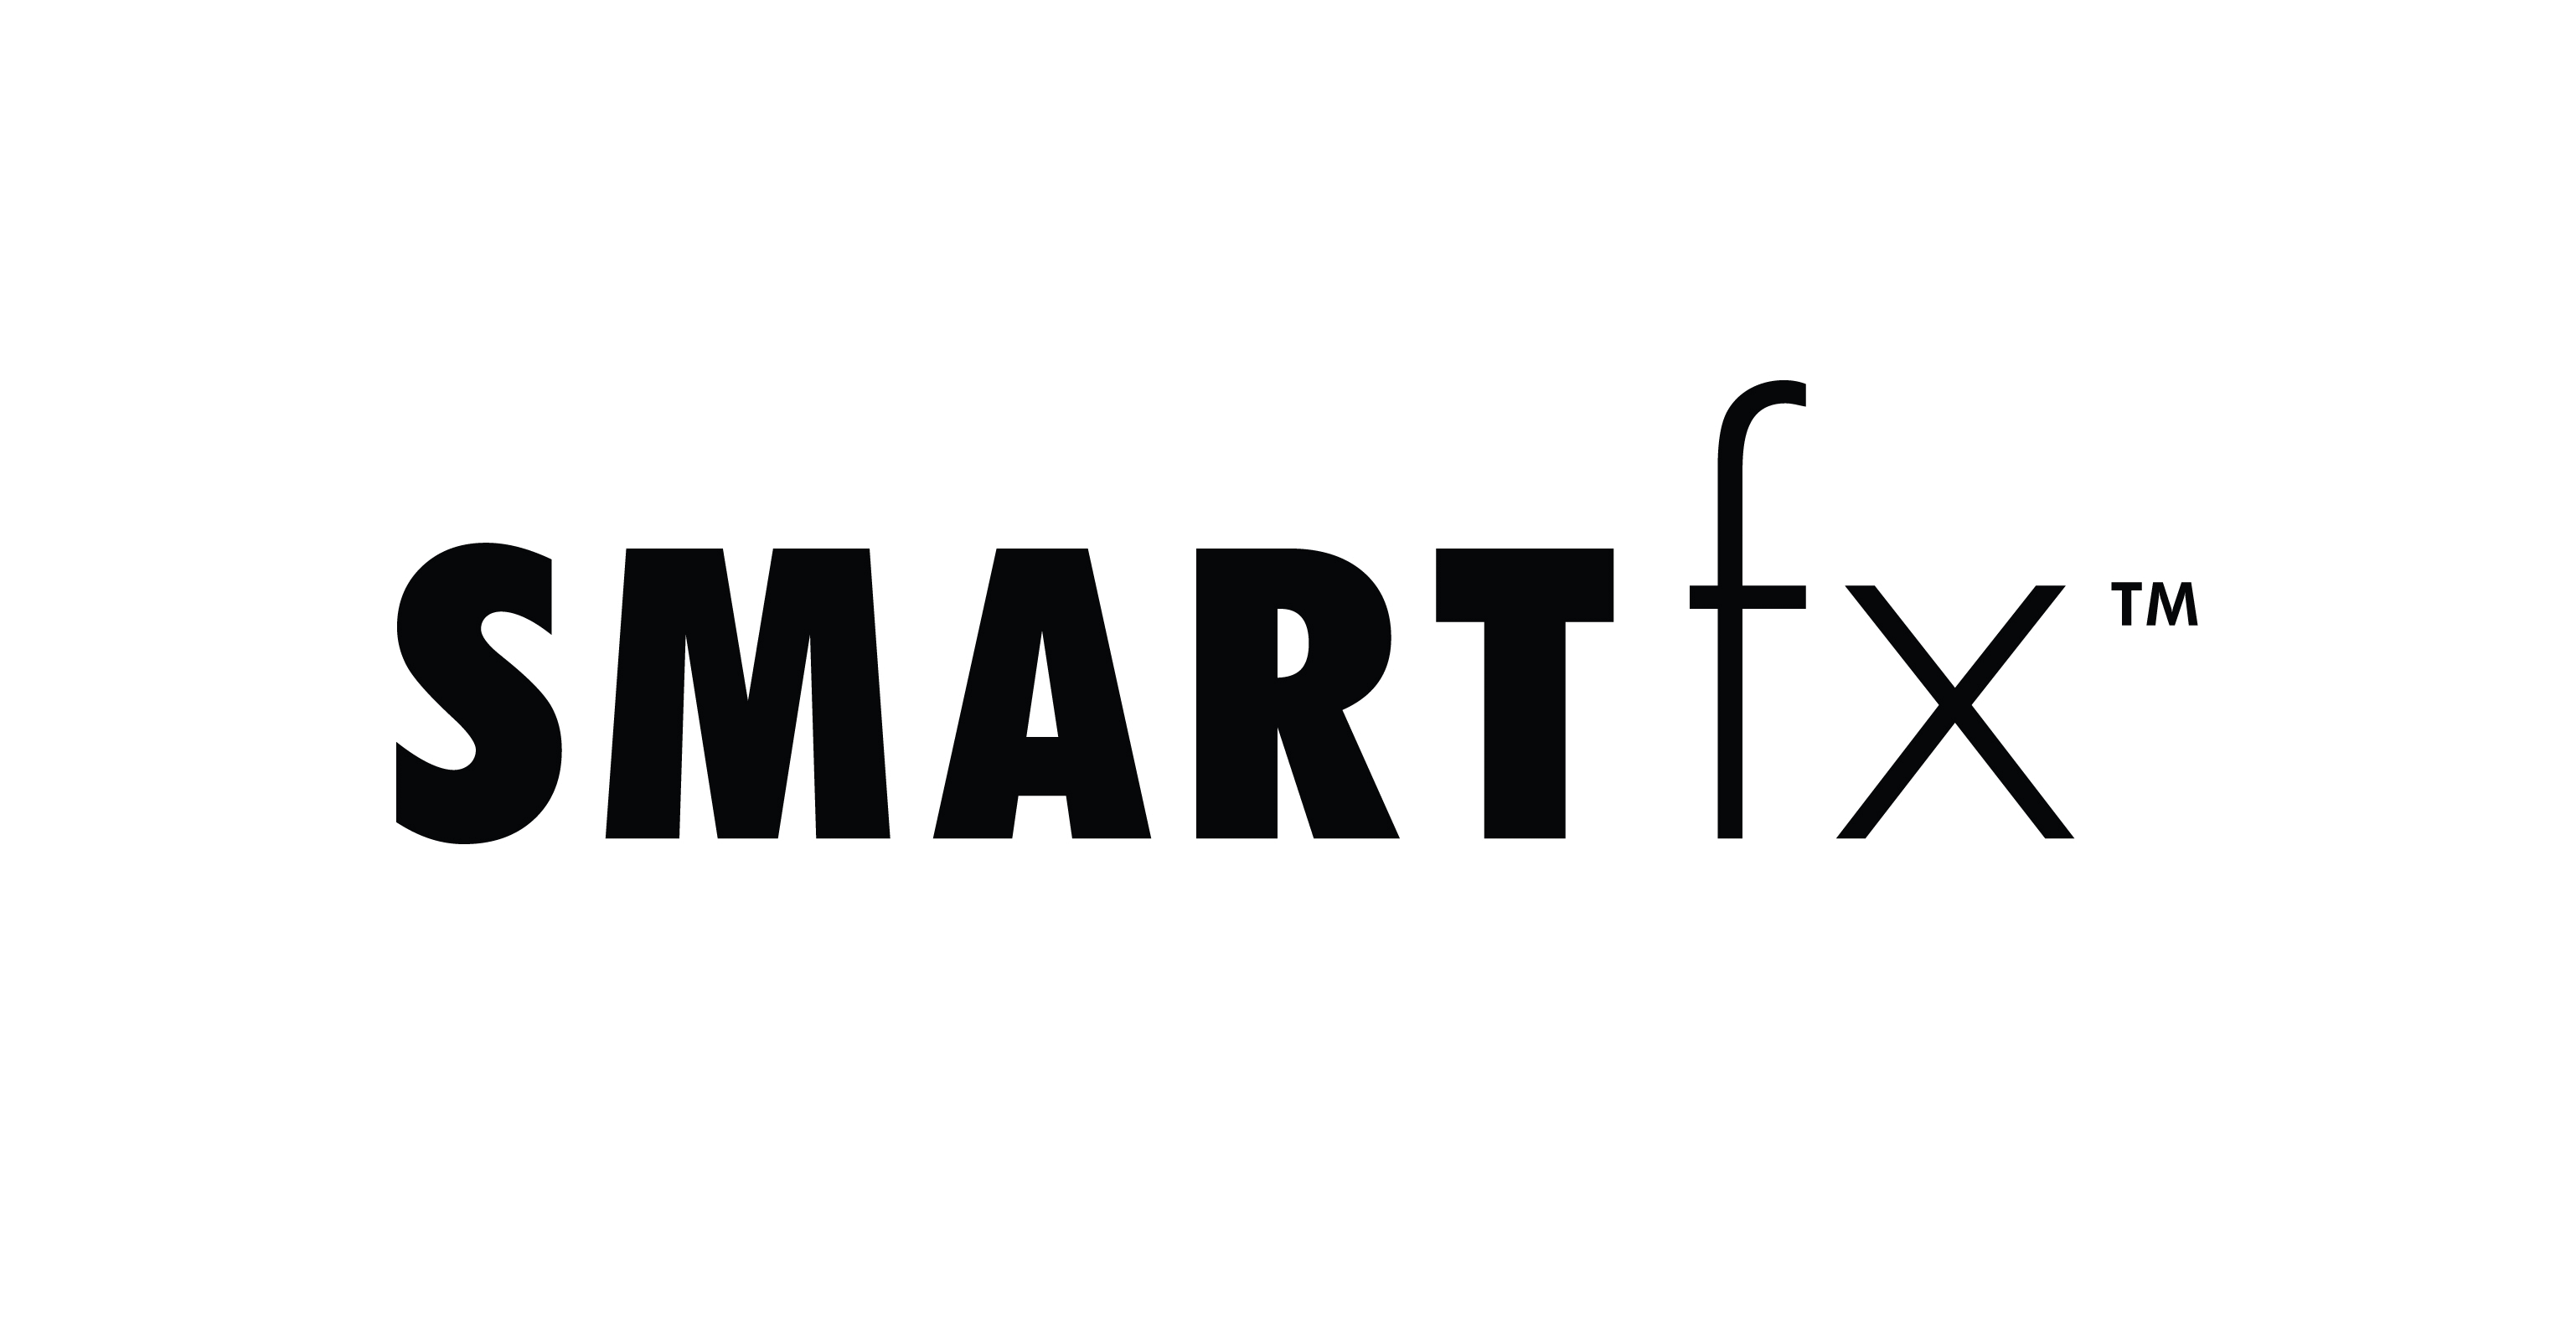 SmartFX